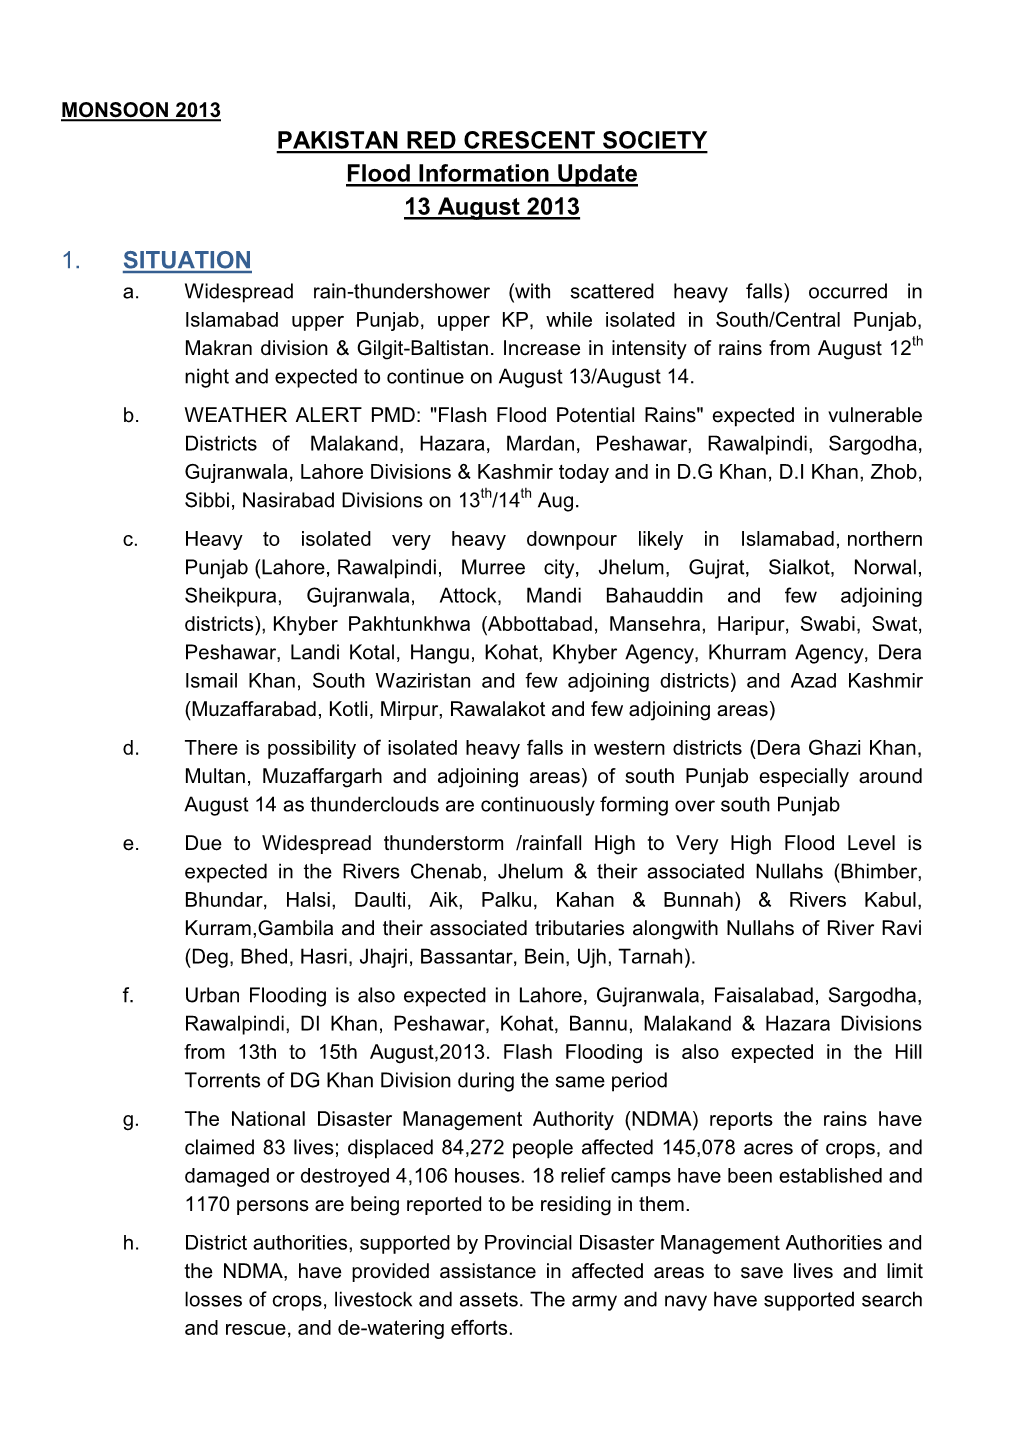 PAKISTAN RED CRESCENT SOCIETY Flood Information Update 13 August 2013